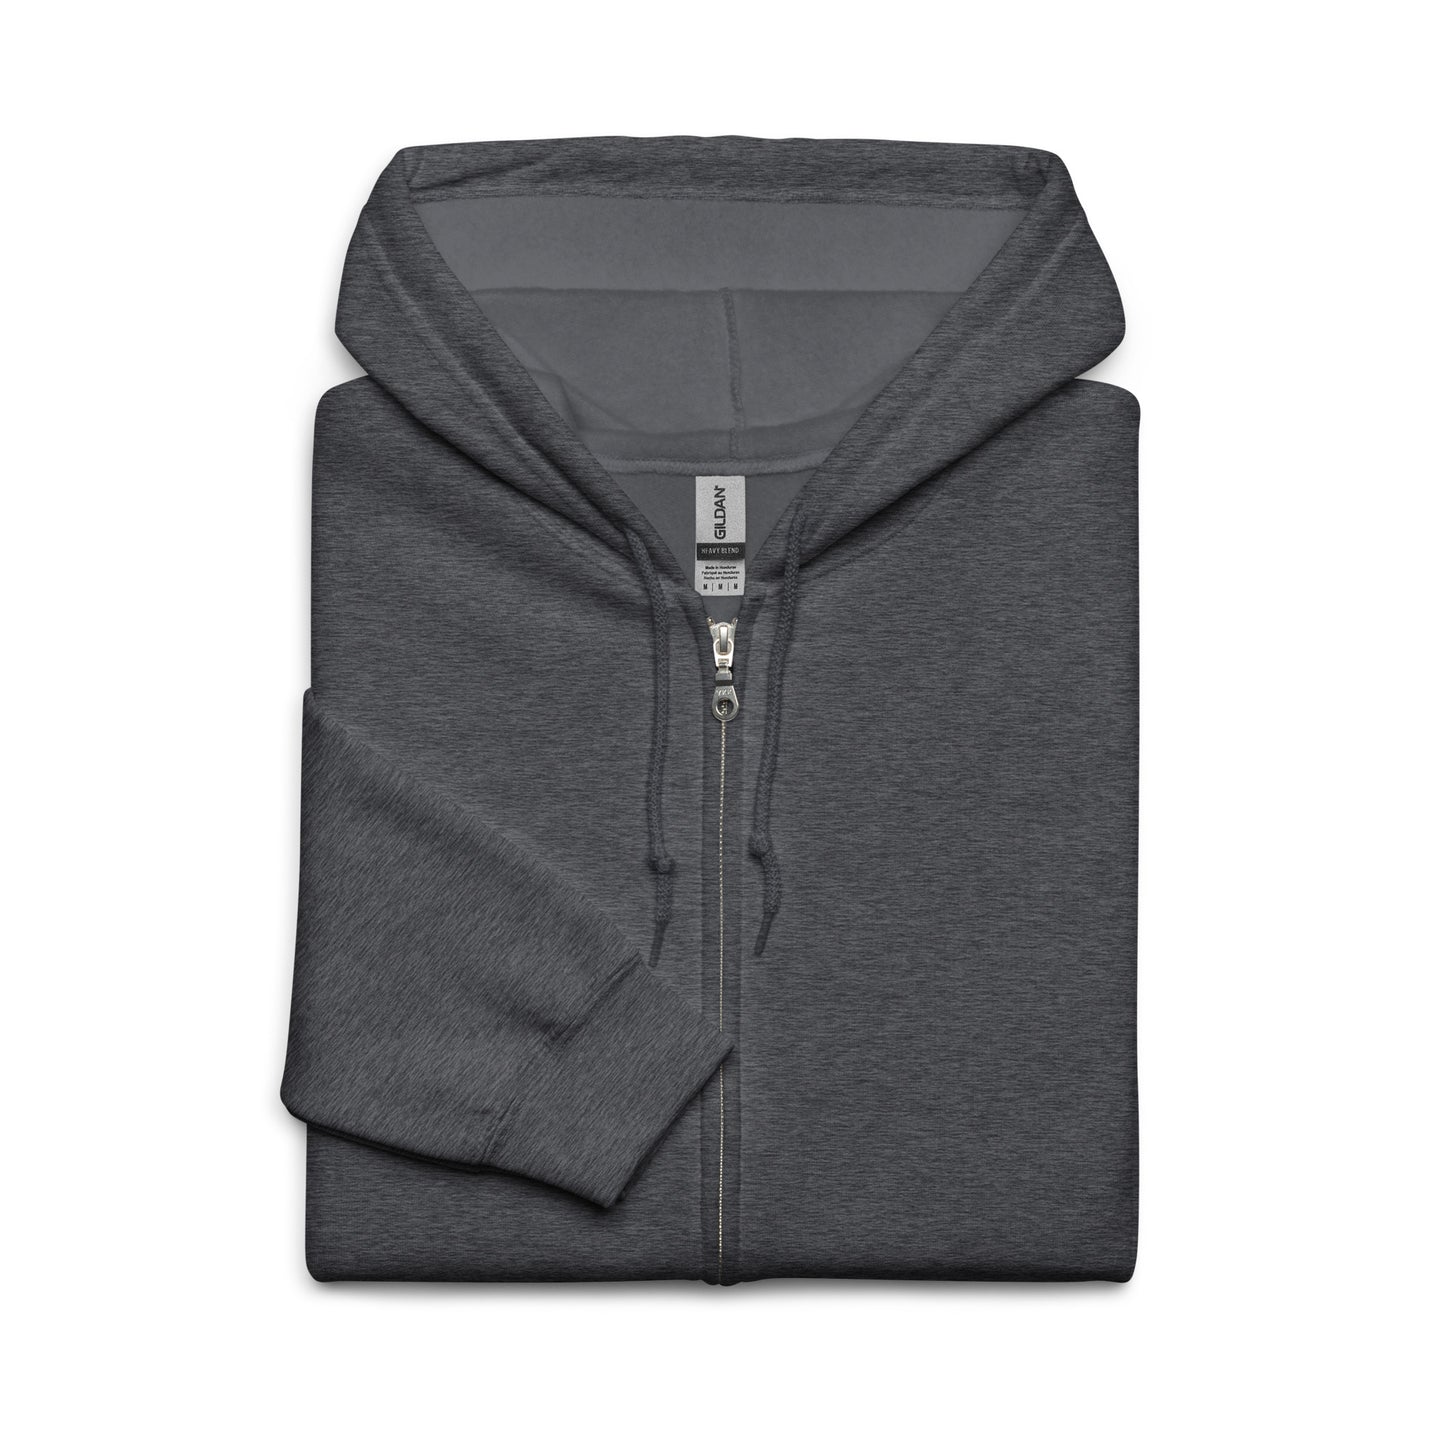 Elevated Equestrian Charcoal Grey Unisex Zip-up Hooded Sweatshirt